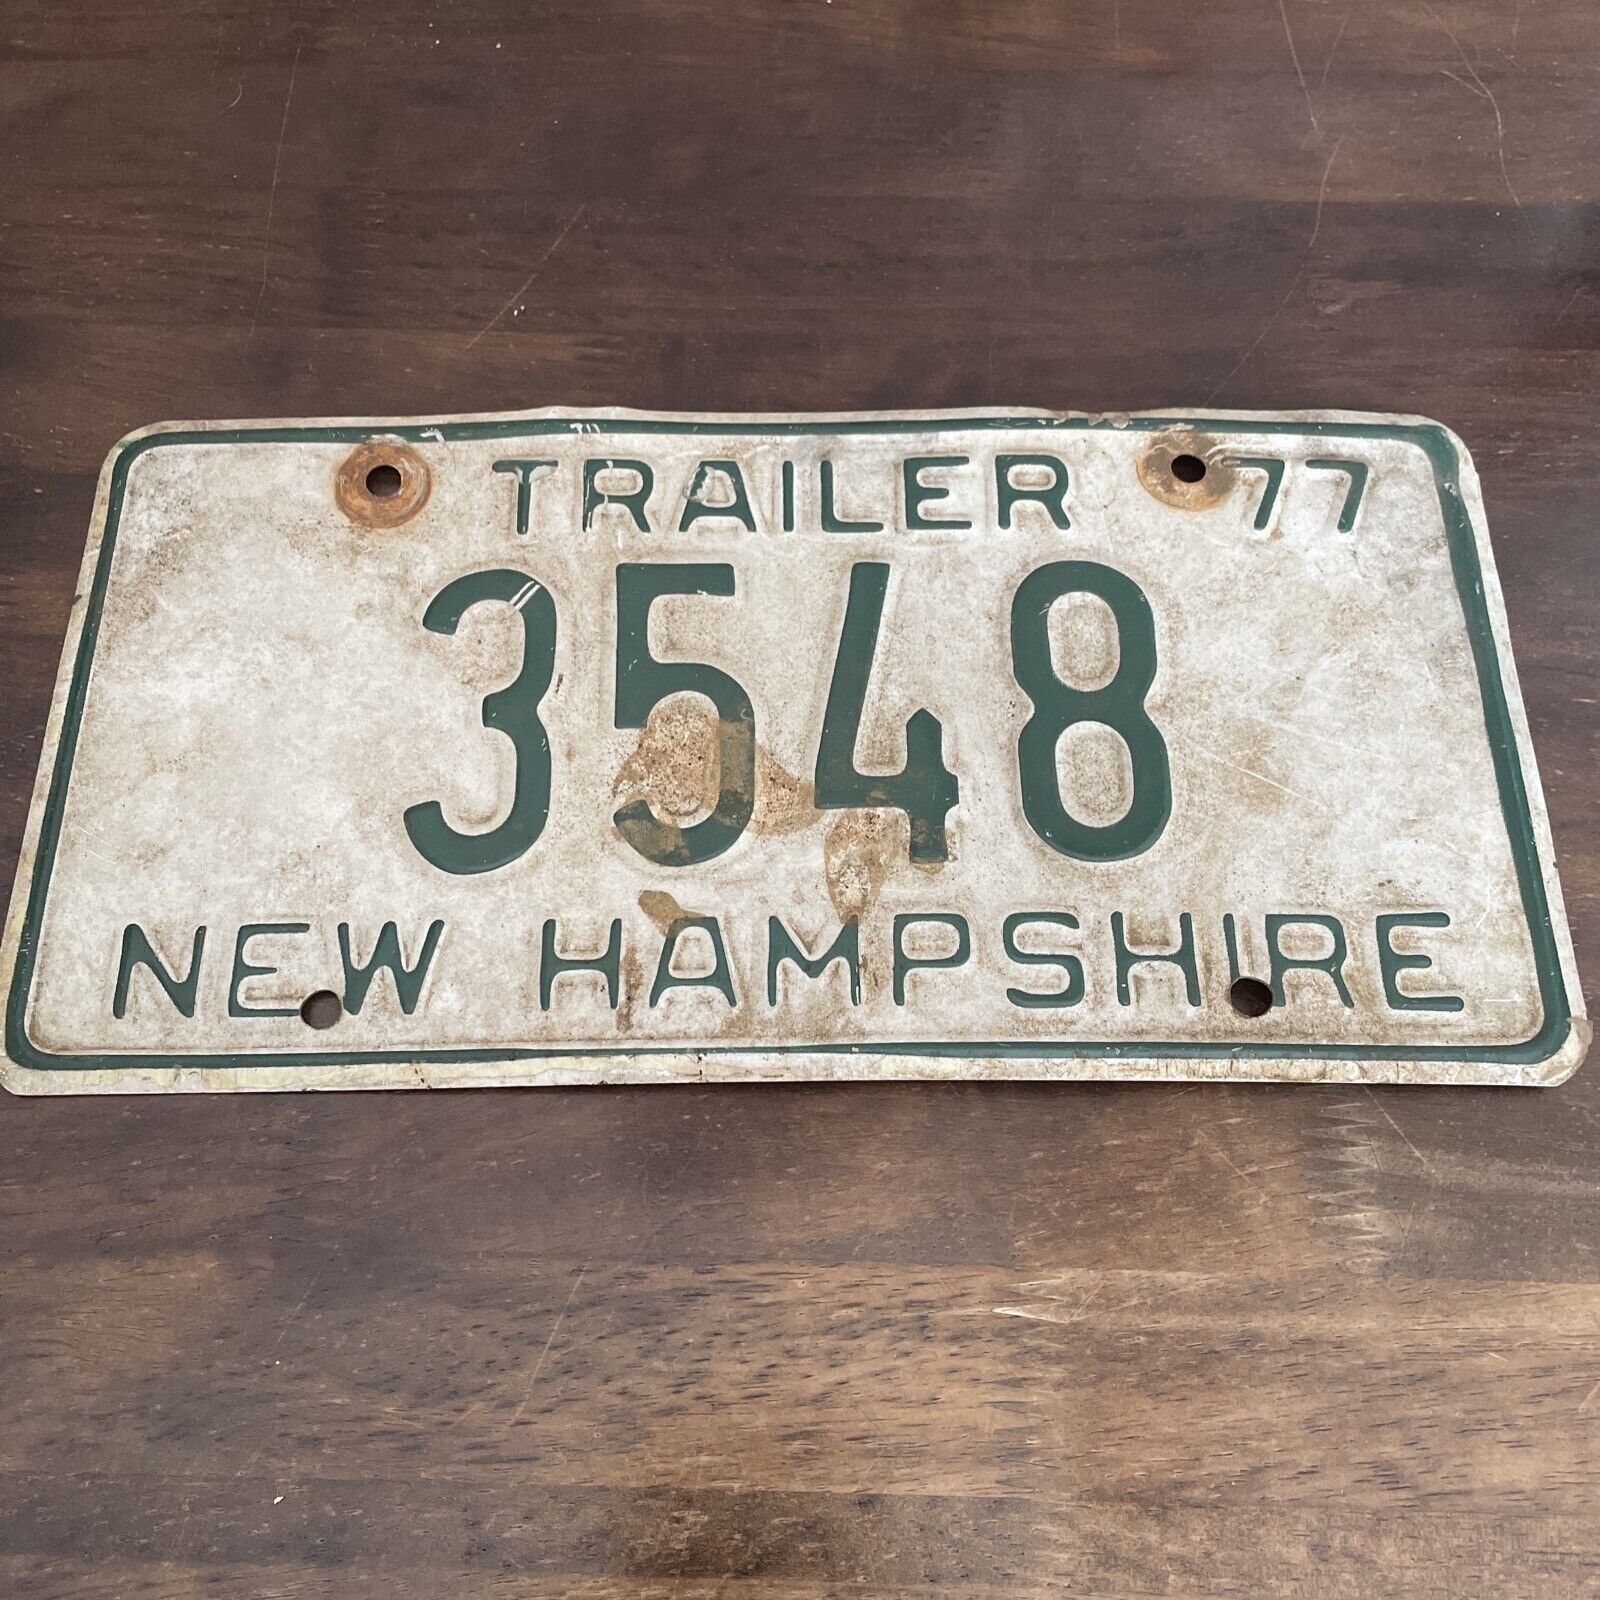 Vintage New Hampshire 1977 Trailer License Plate Barn Find #3548